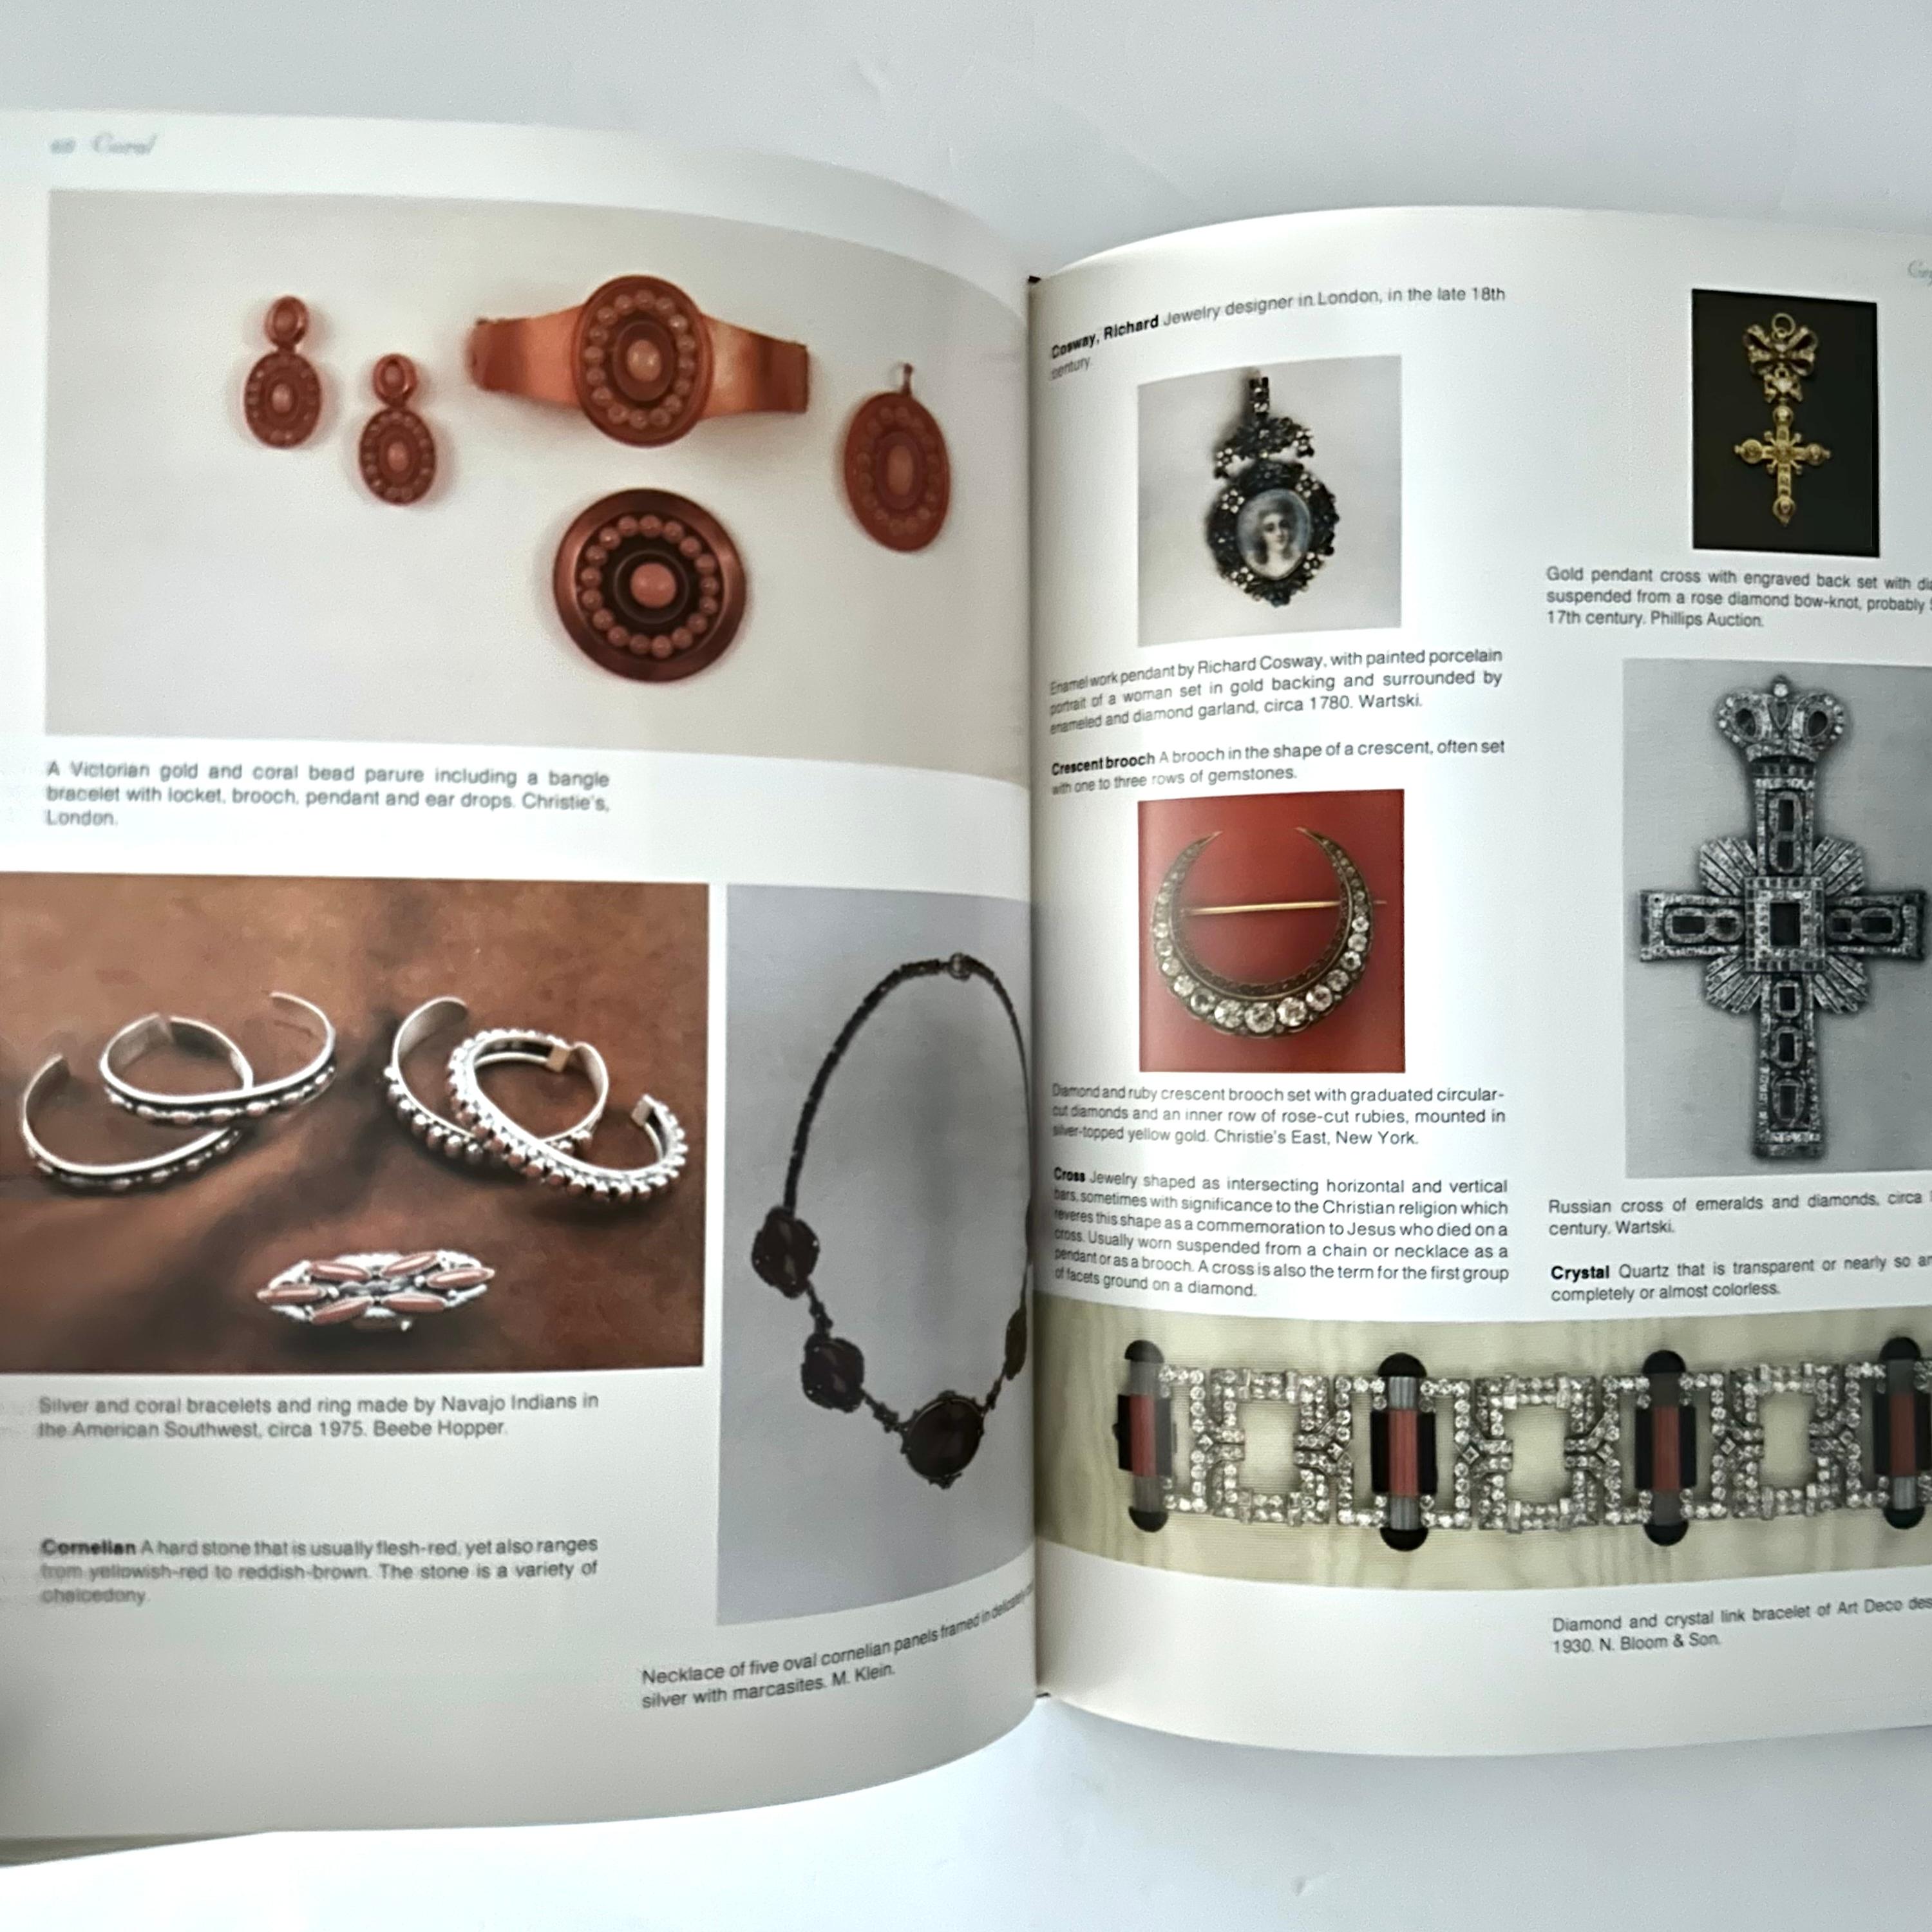 Handbook of Fine Jewelry - Nancy N. Schiffer - 1st edition, 1991 For Sale 2